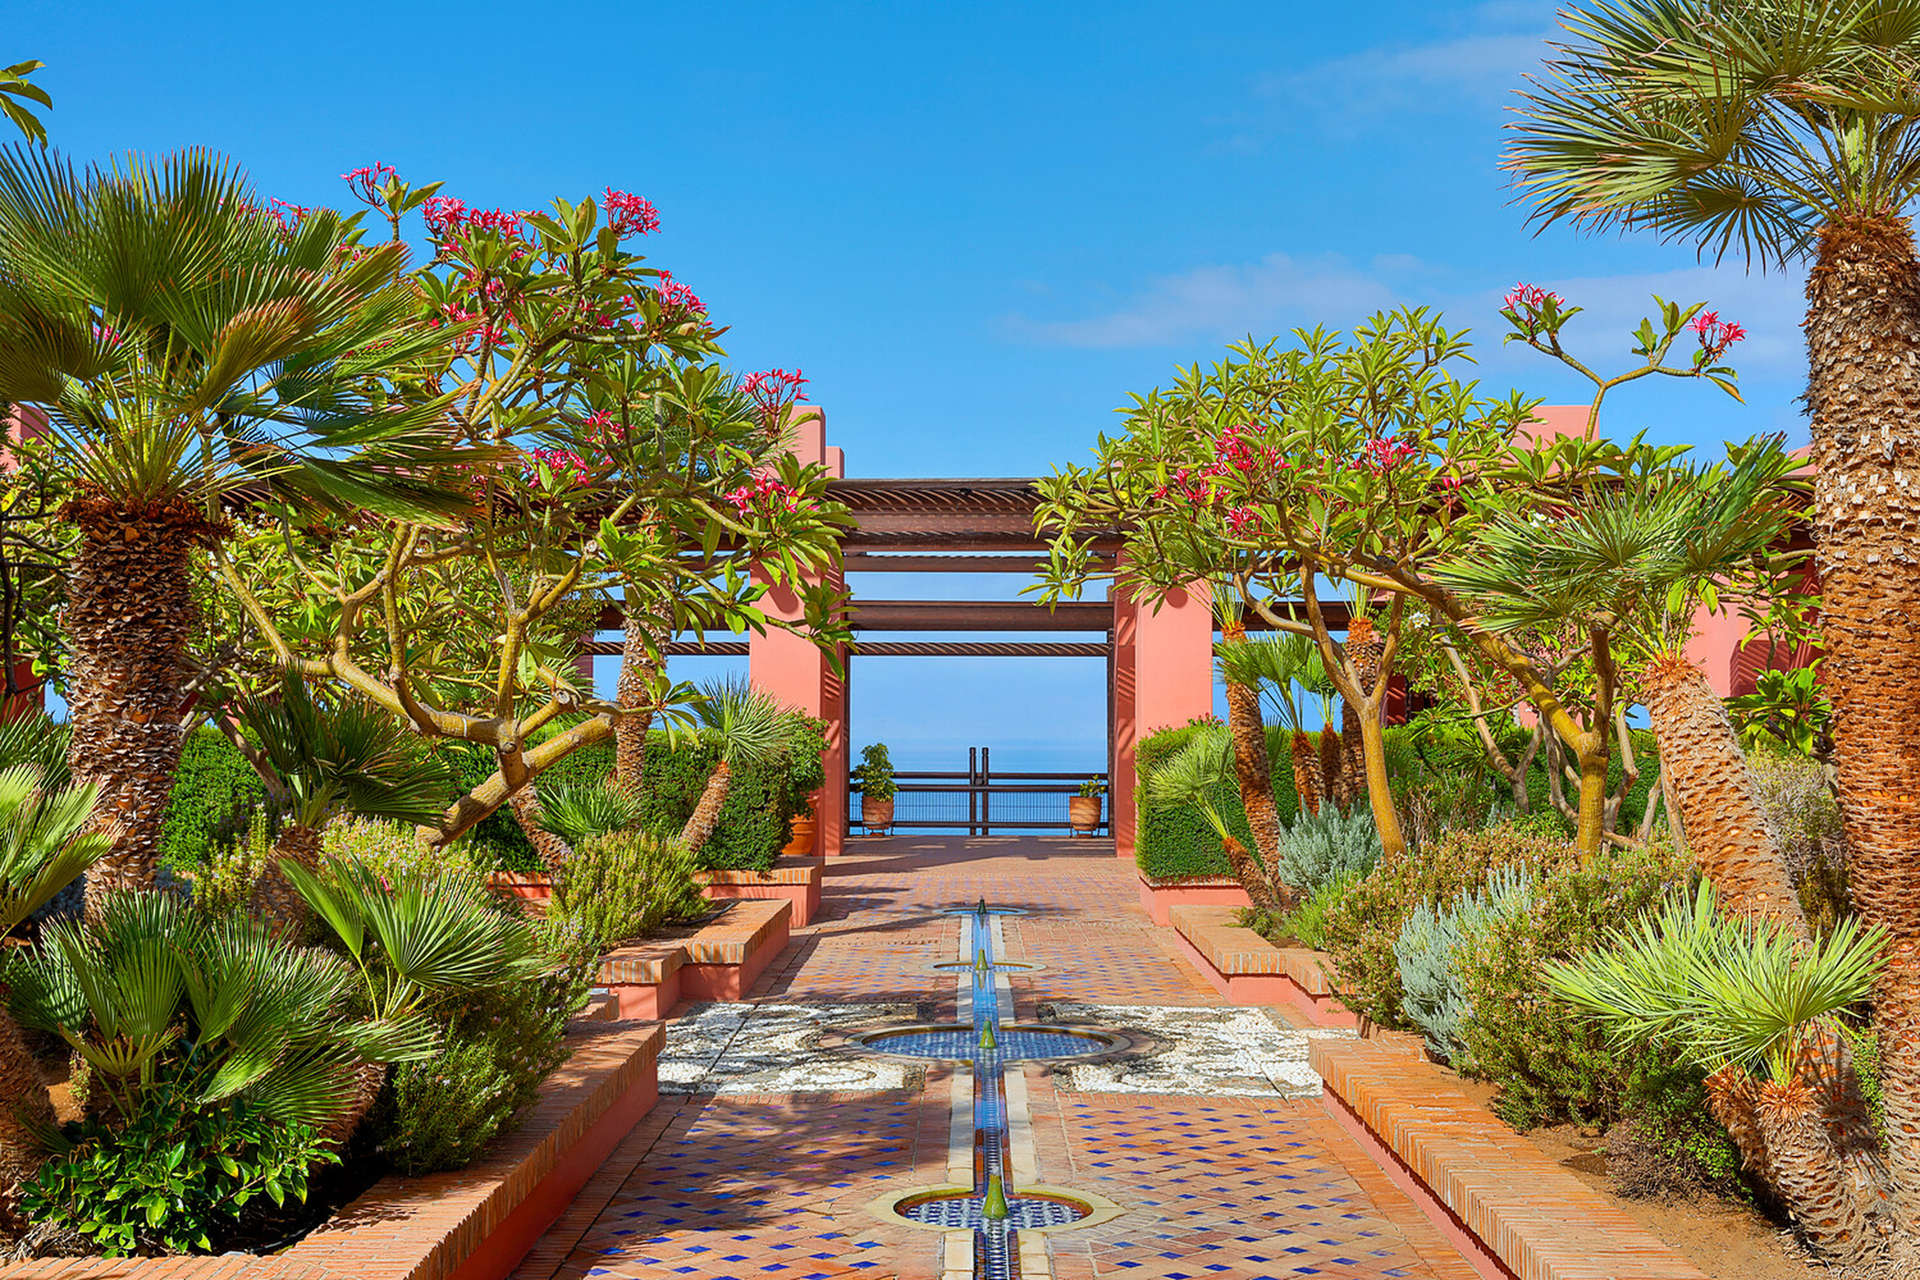 Il Ritz-Carlton Tenerife, Abama